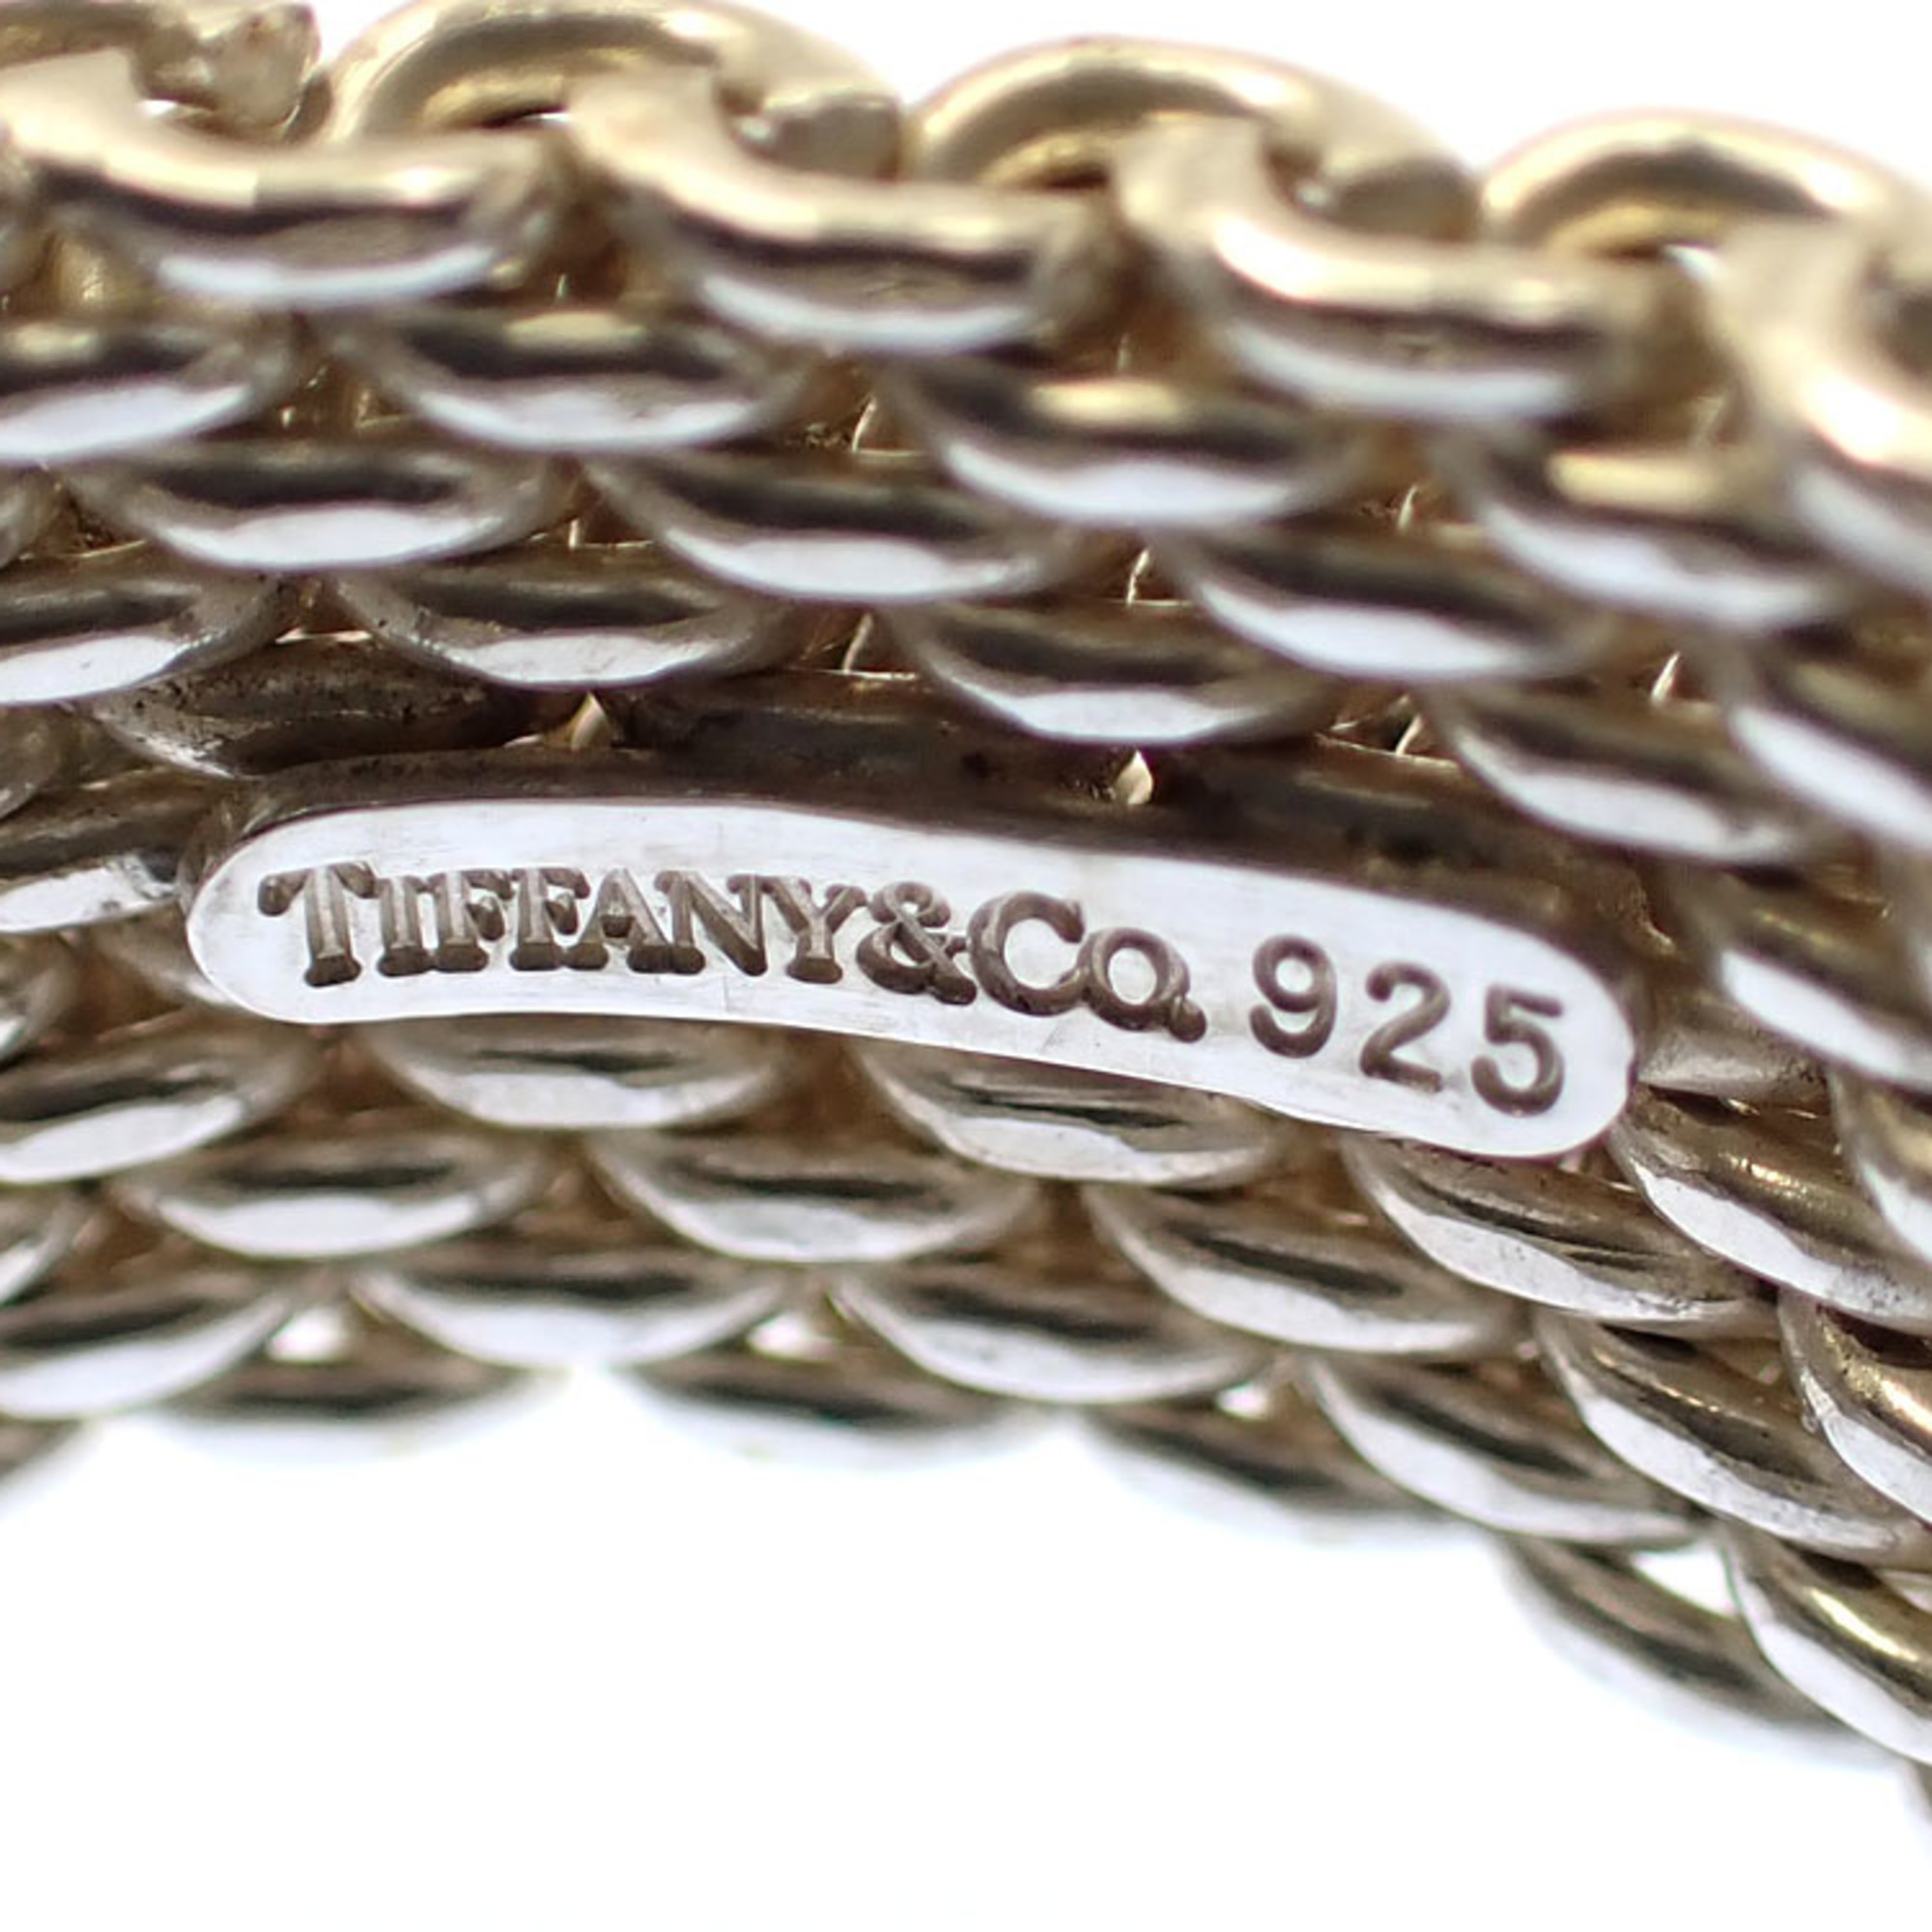 Tiffany Somerset Ring for Women, SV925, 12K, 8.6g, Silver, Mesh